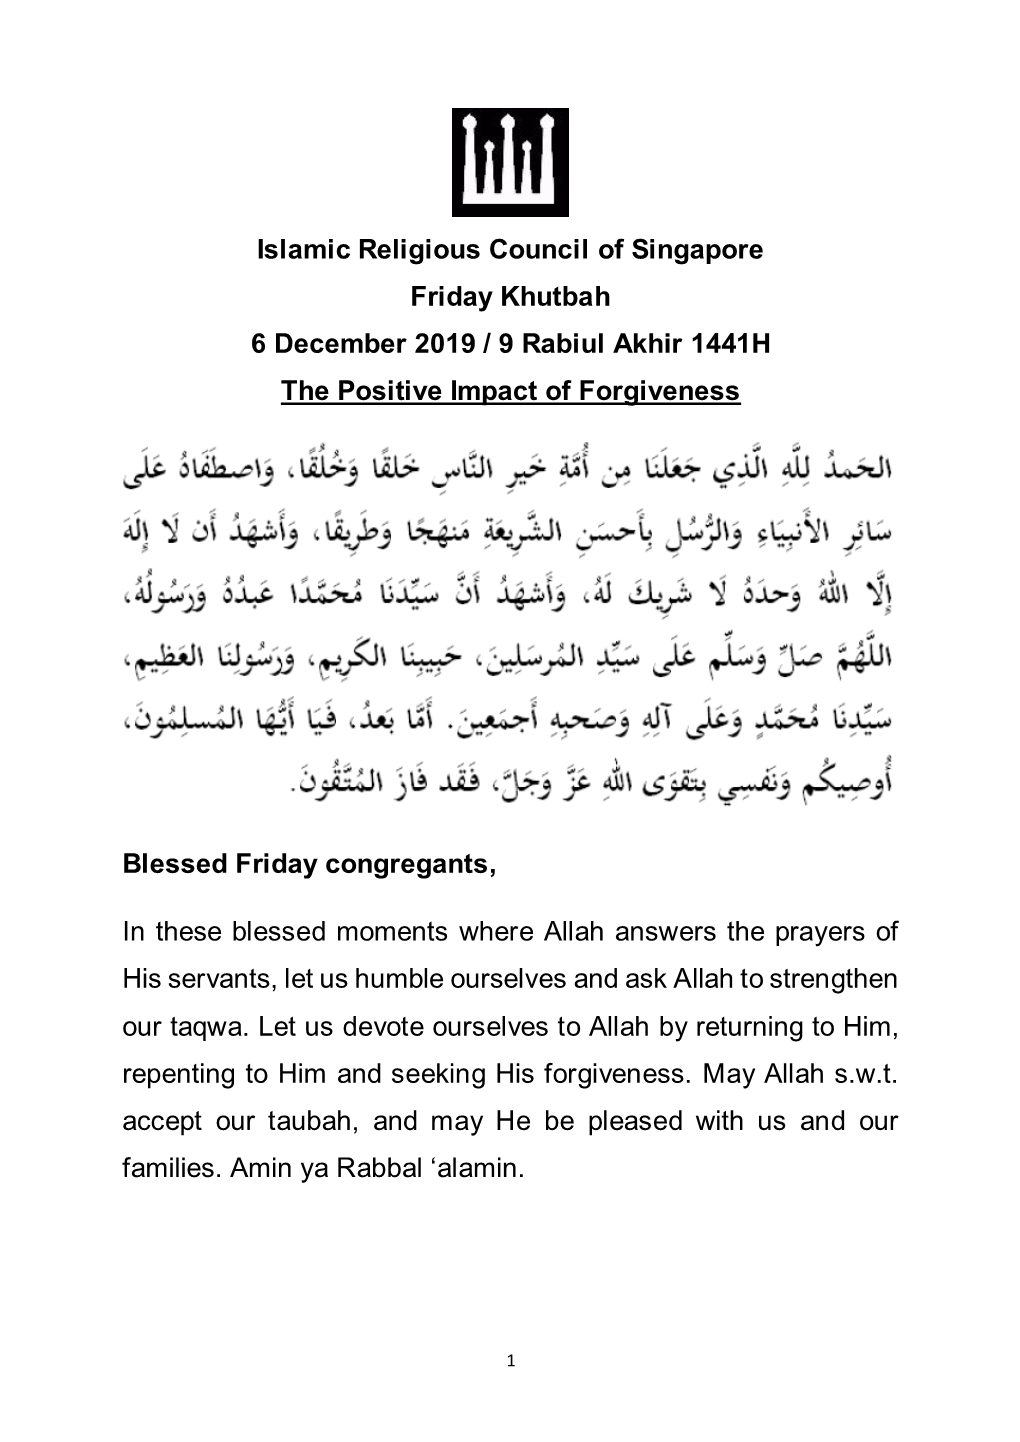 Islamic Religious Council of Singapore Friday Khutbah 6 December 2019 / 9 Rabiul Akhir 1441H the Positive Impact of Forgiveness